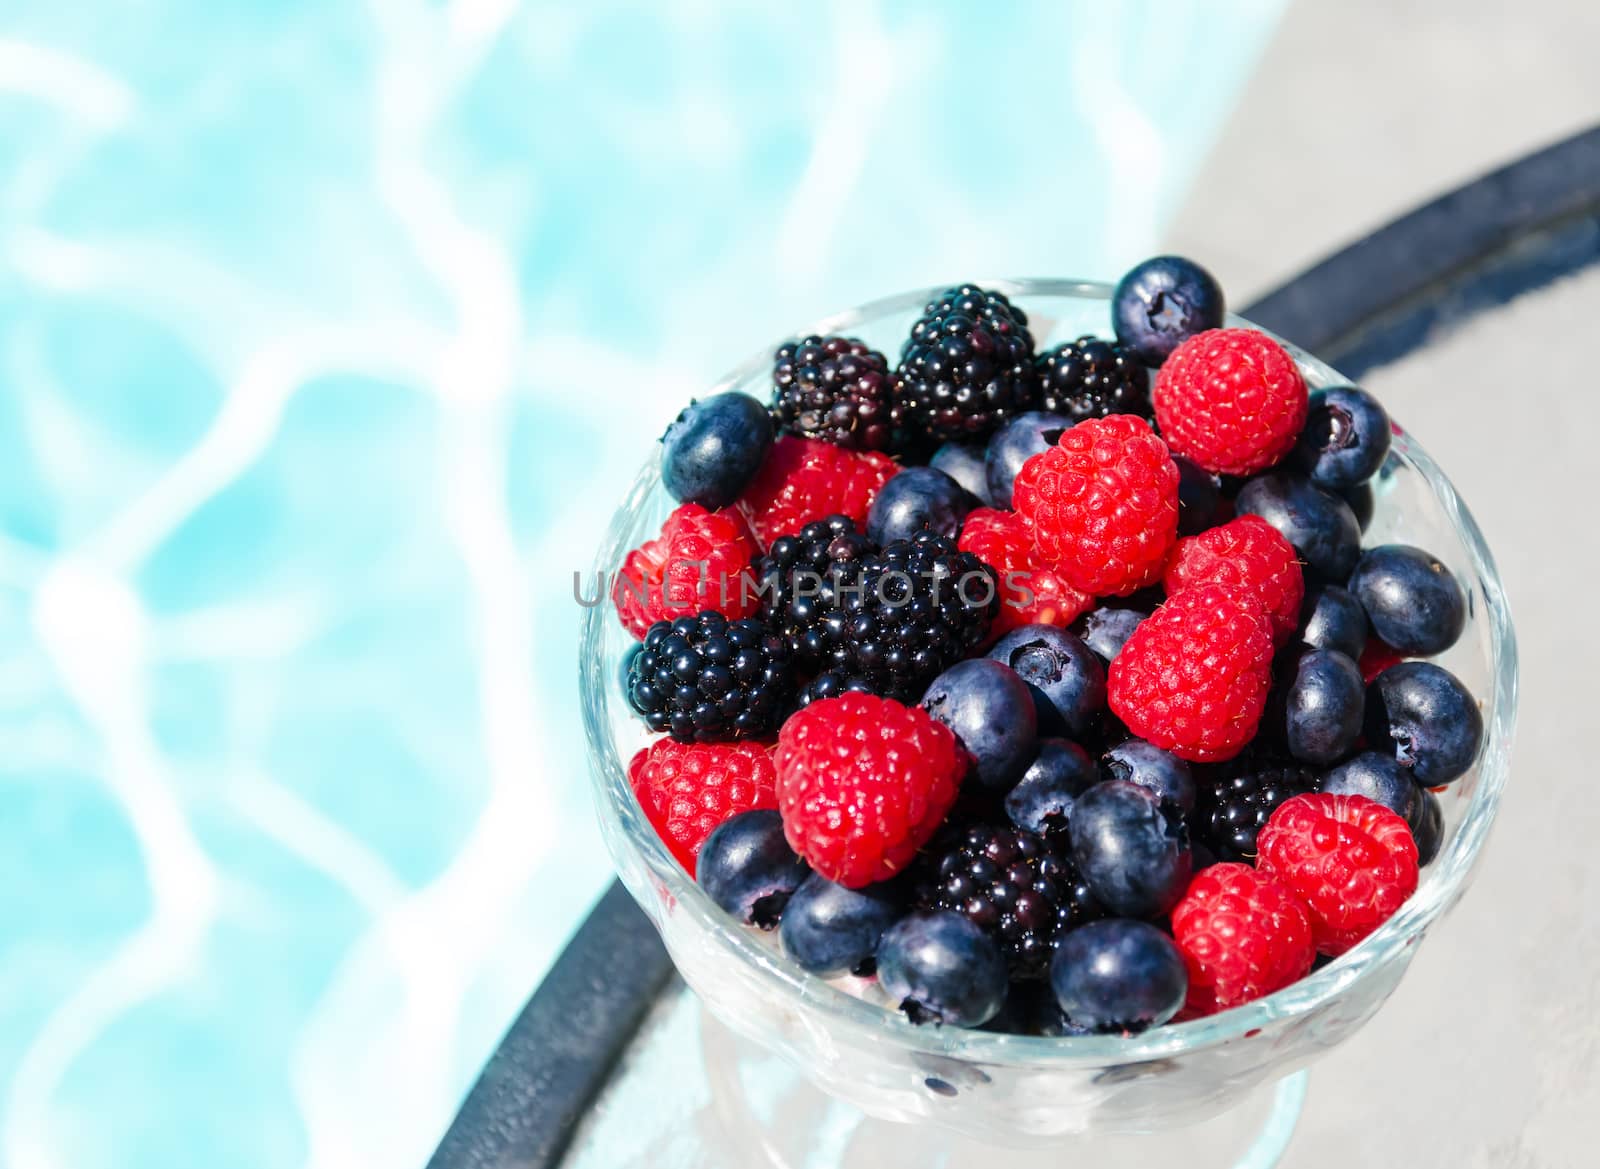 Morning dessert with berries by EllenSmile